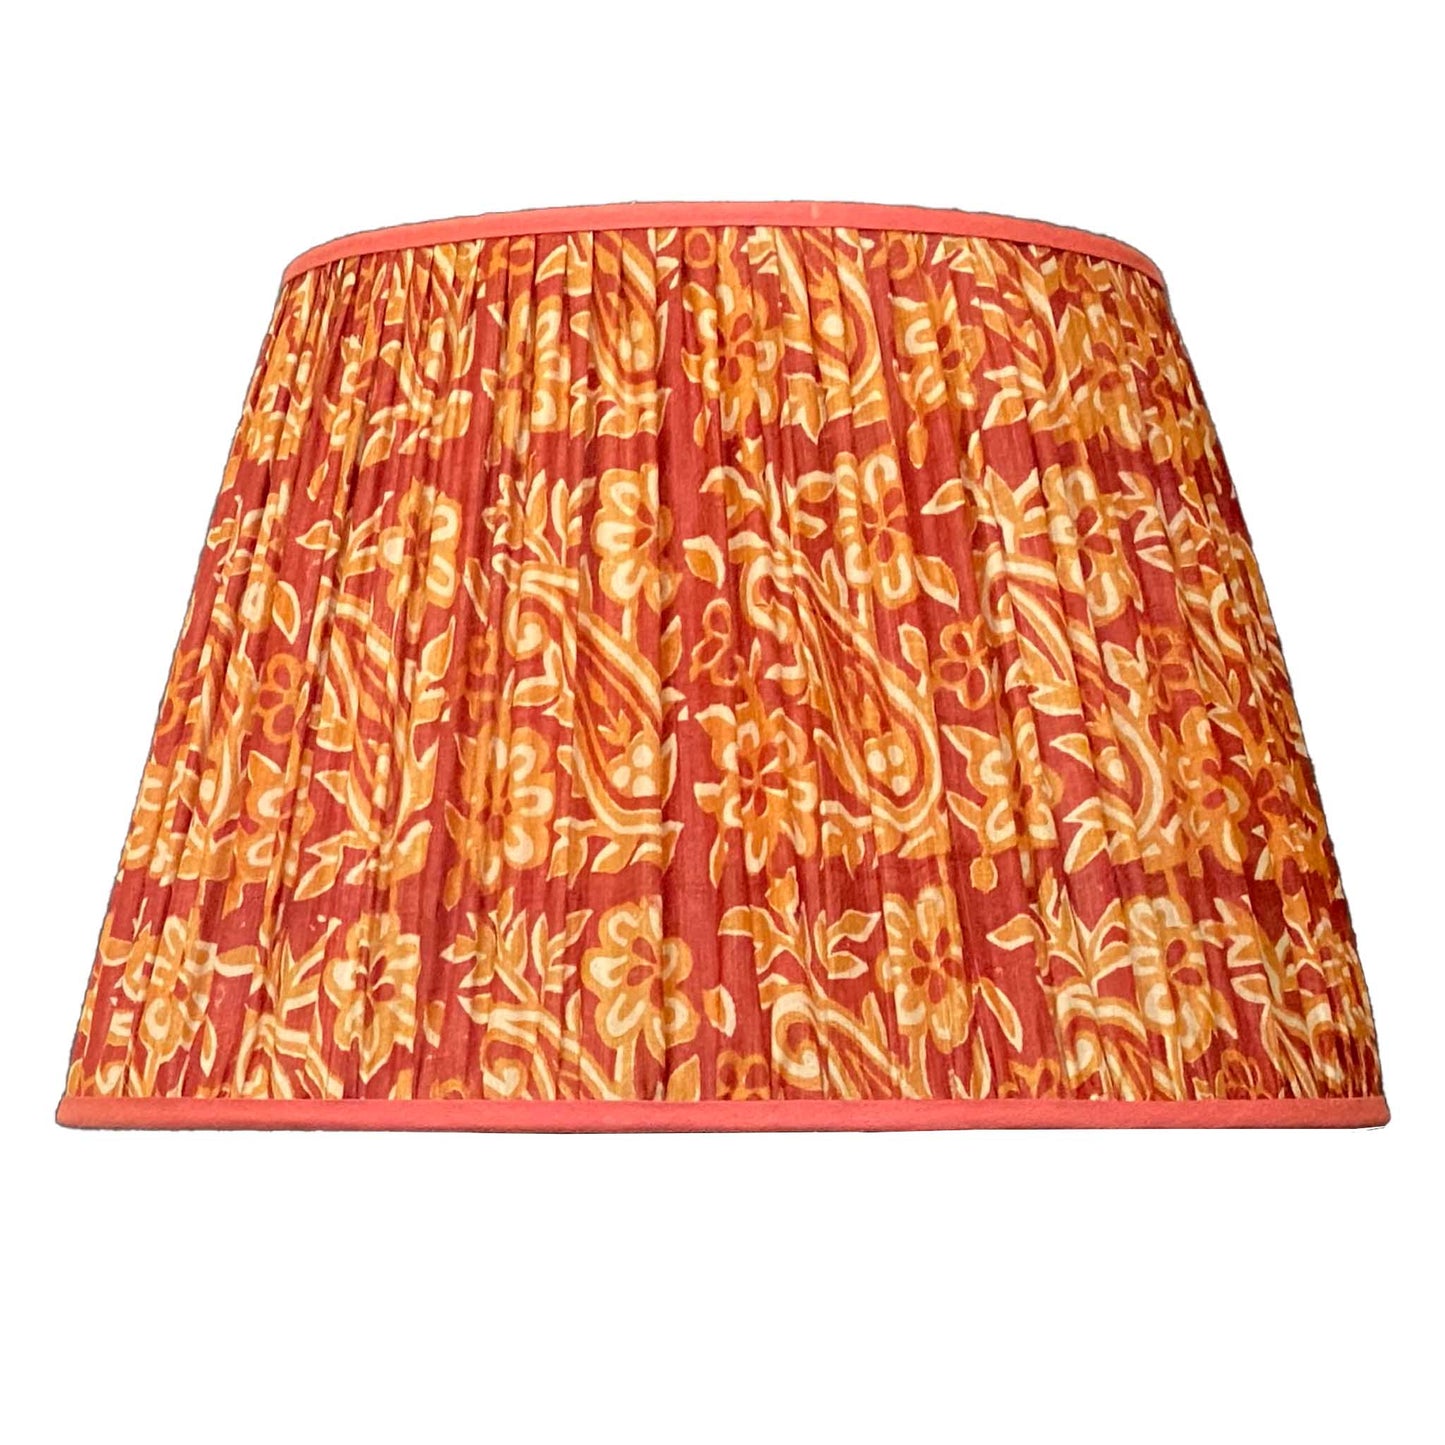 Russet and ochre vintage silk sari lampshade cutout